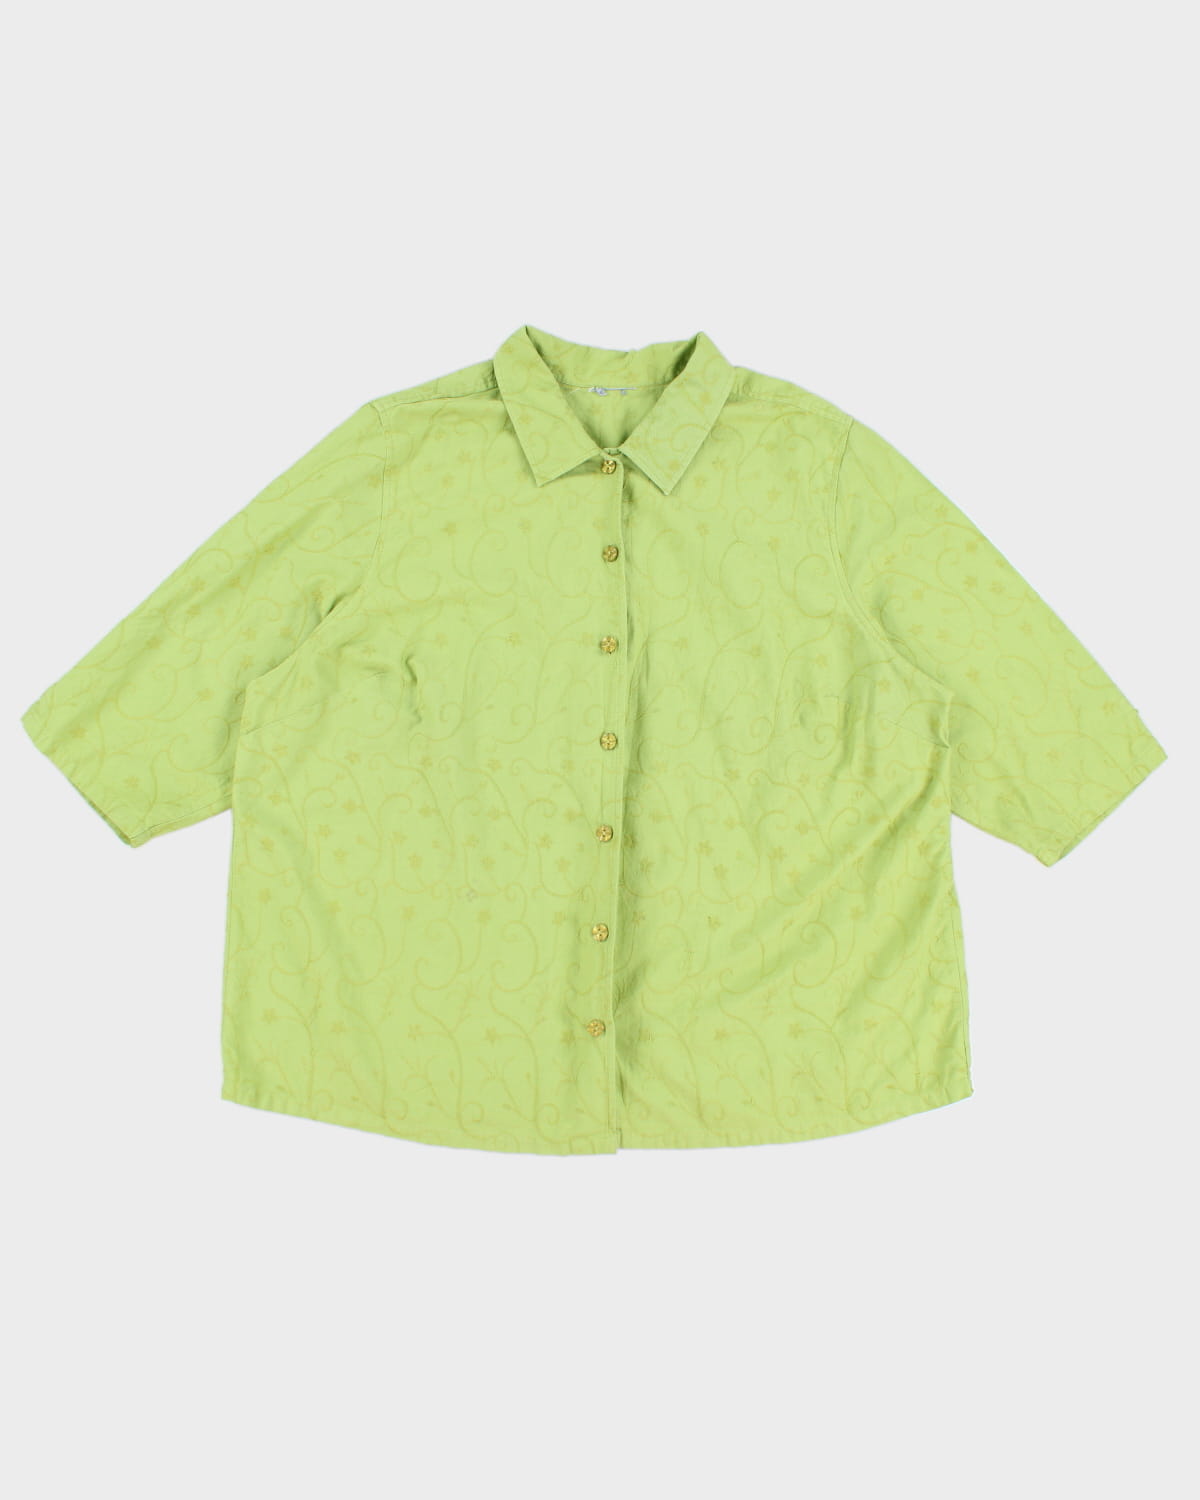 Vintage Green Embroidered Shirt - XXXL